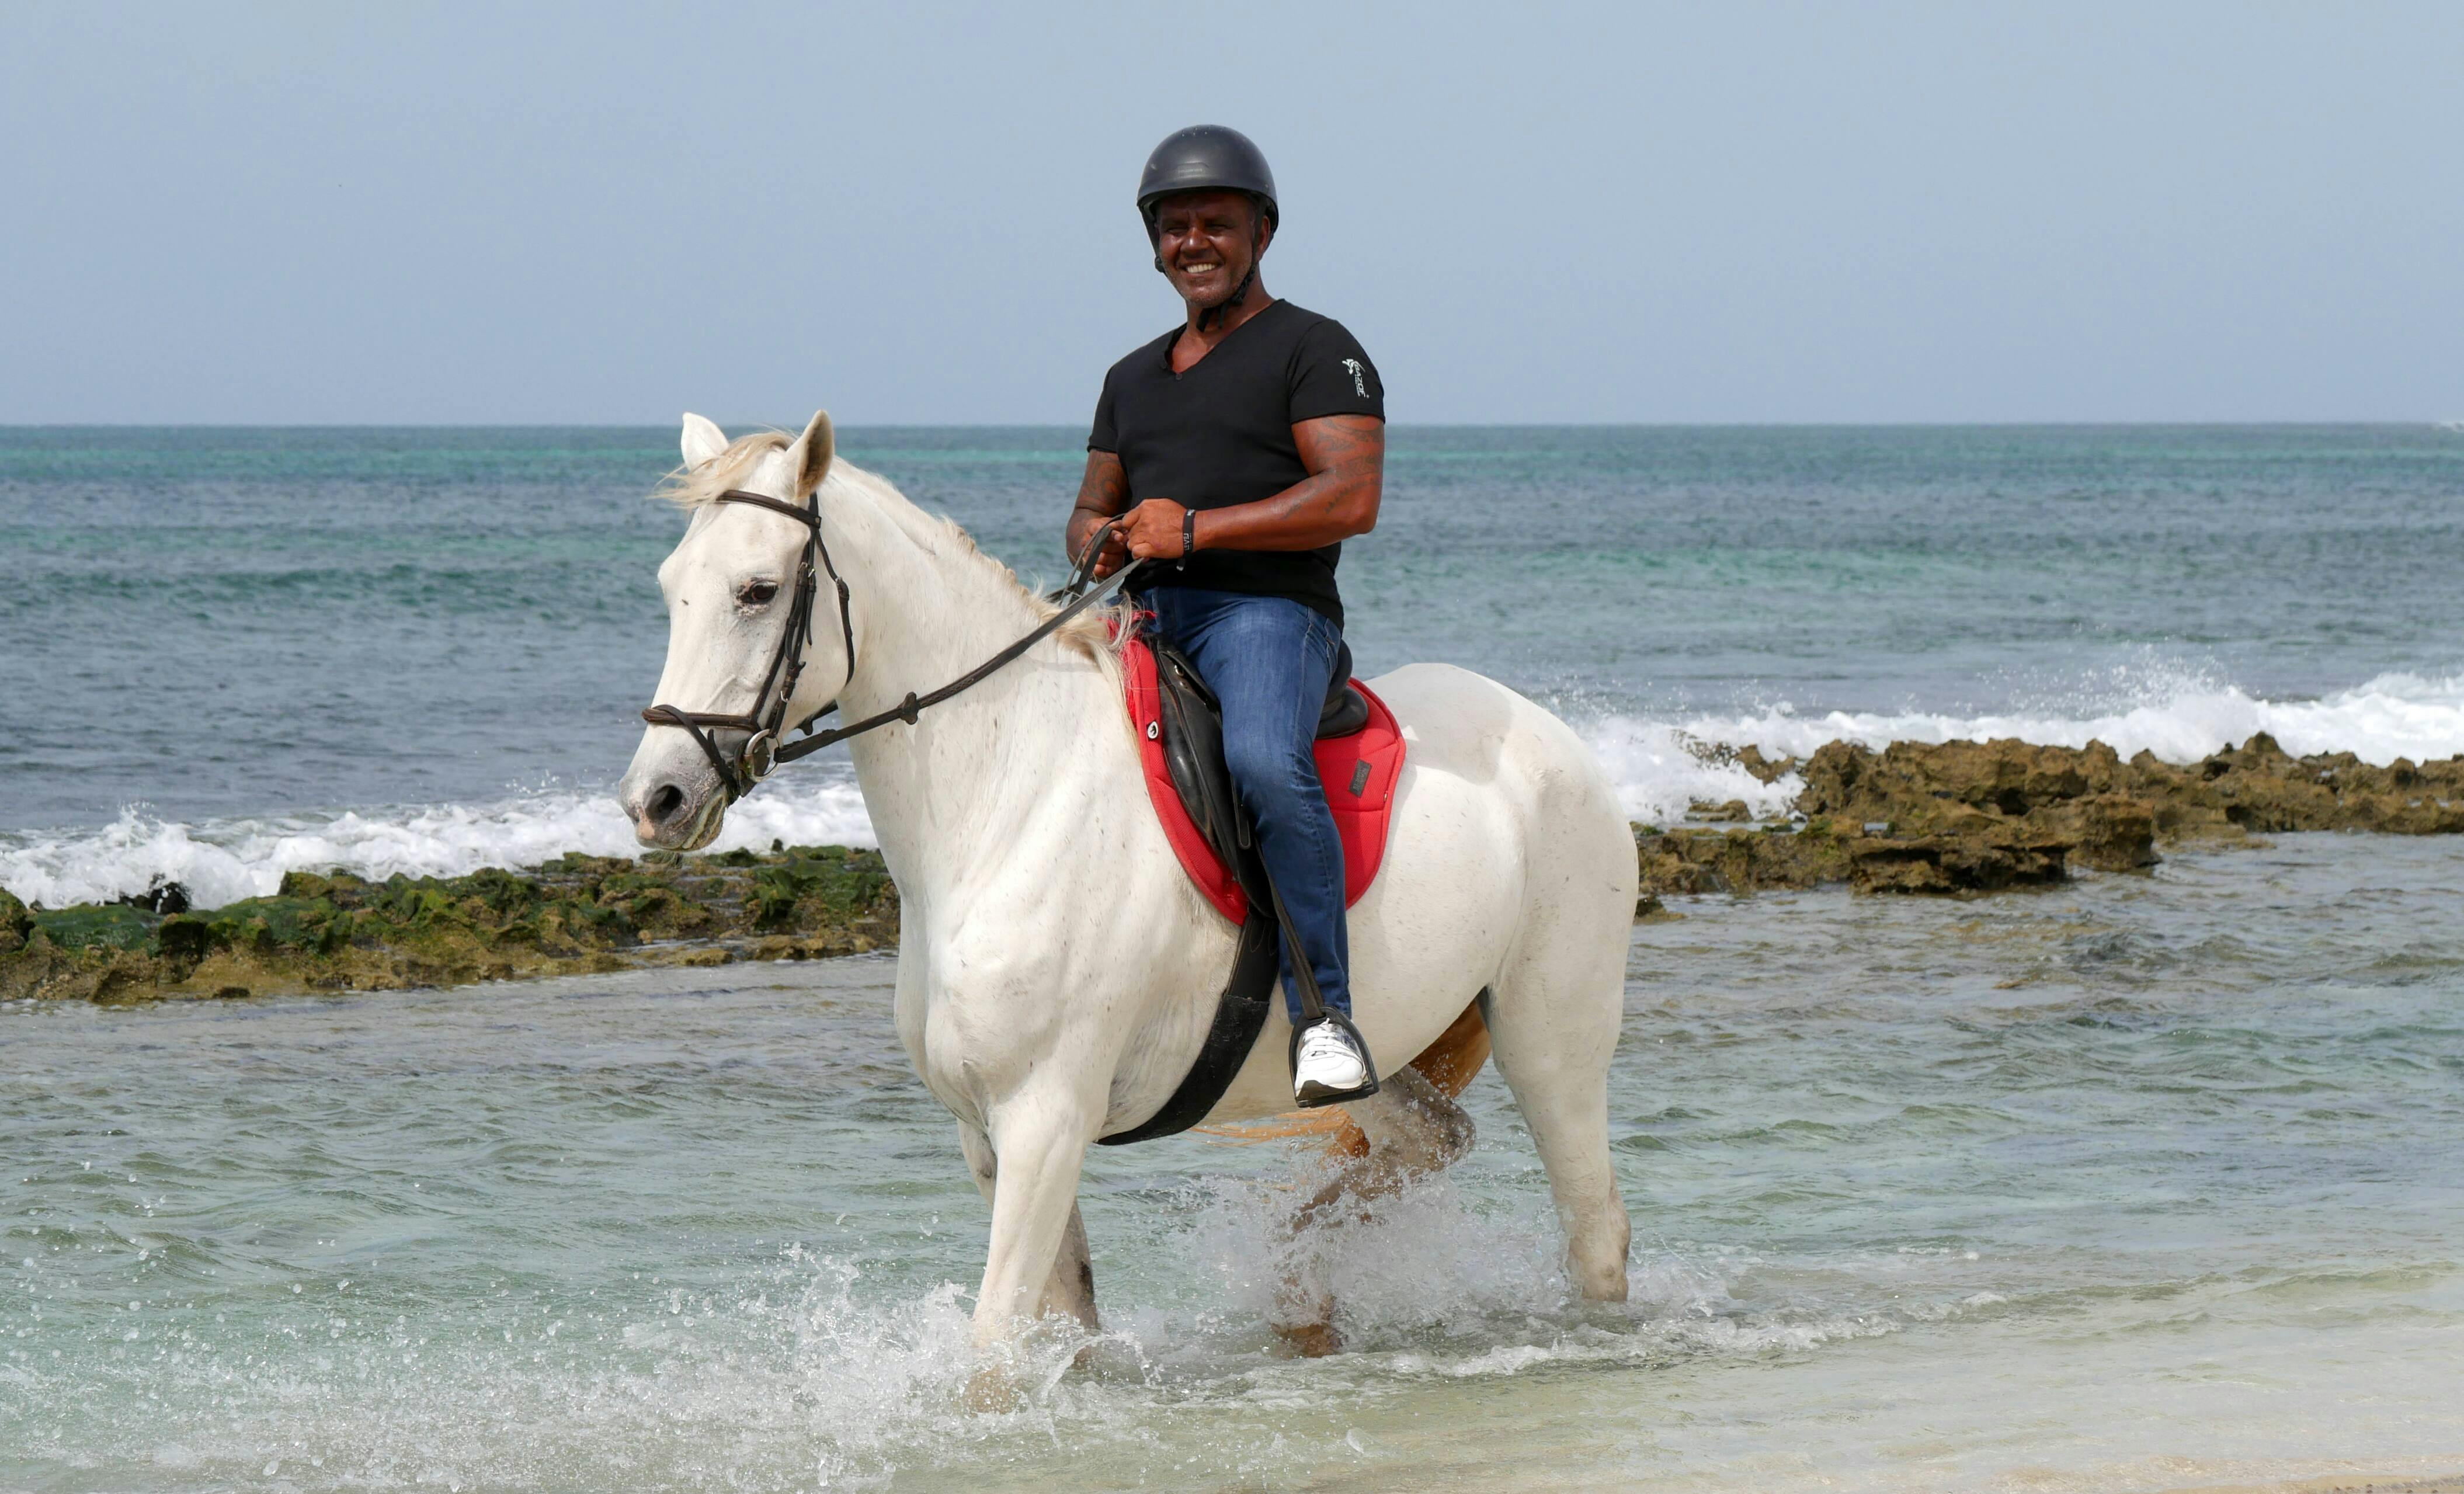 Sal Beach Horse Riding with Photoshoot